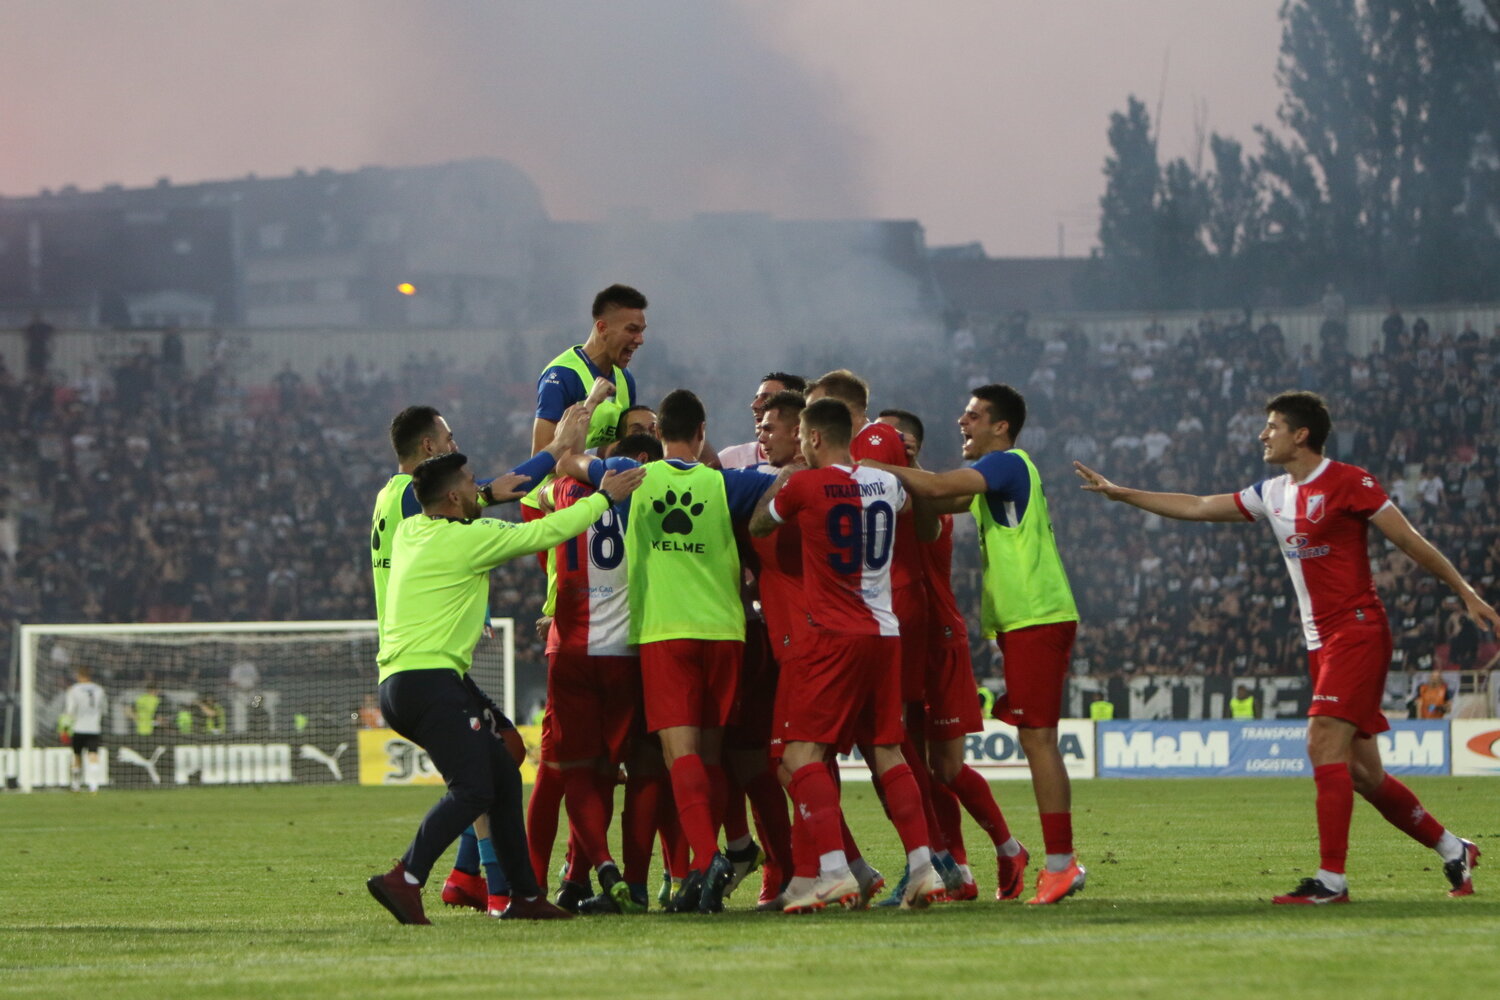 Serbia - FK Vojvodina Novi Sad Under 19 - Results, fixtures, squad,  statistics, photos, videos and news - Soccerway